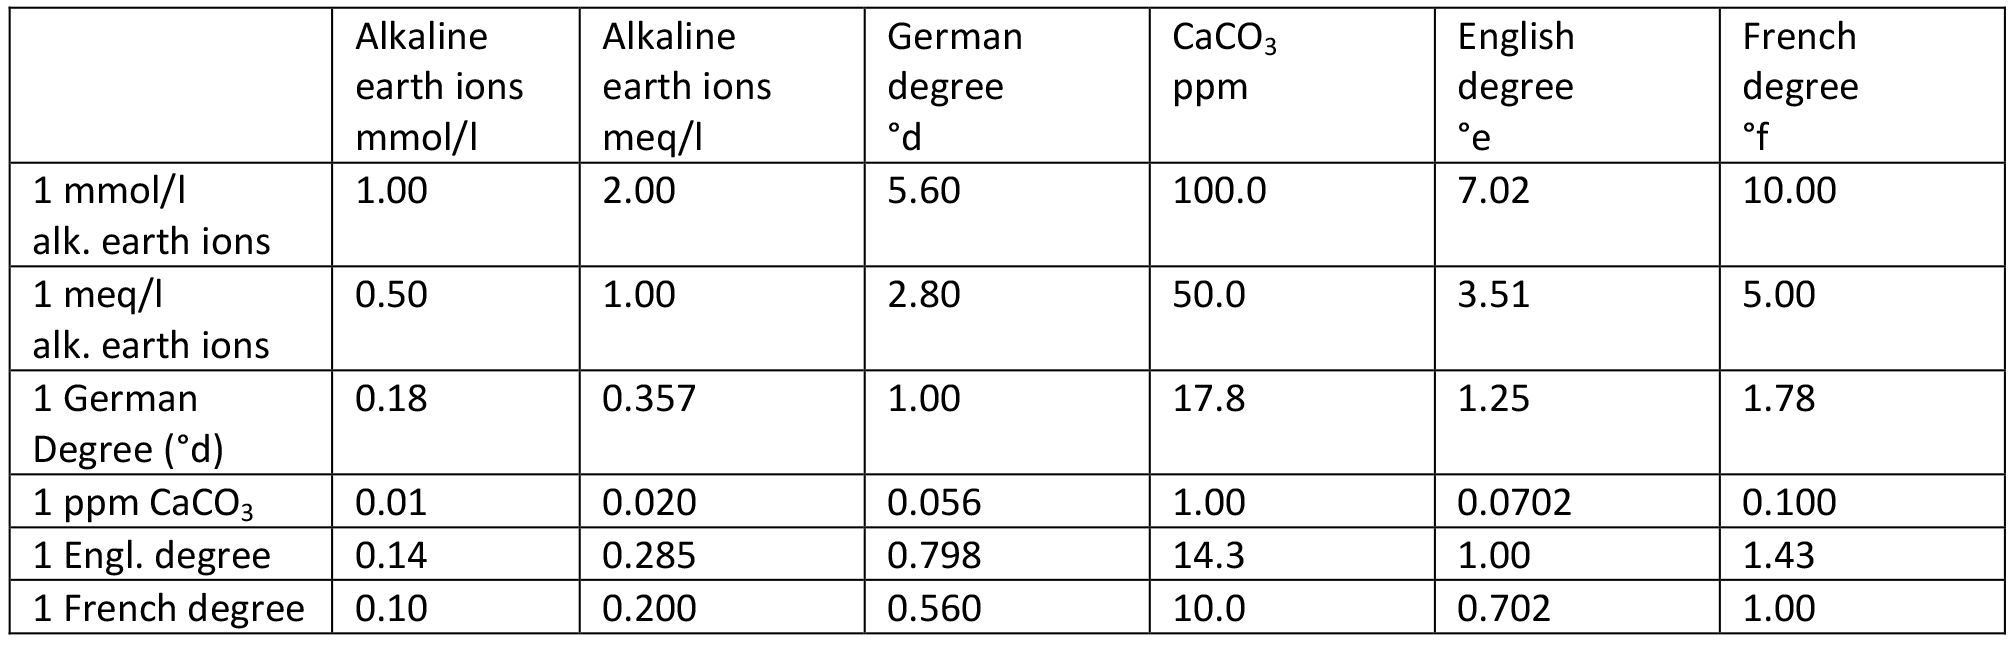 Water Hardness Measurement Conversion Chart